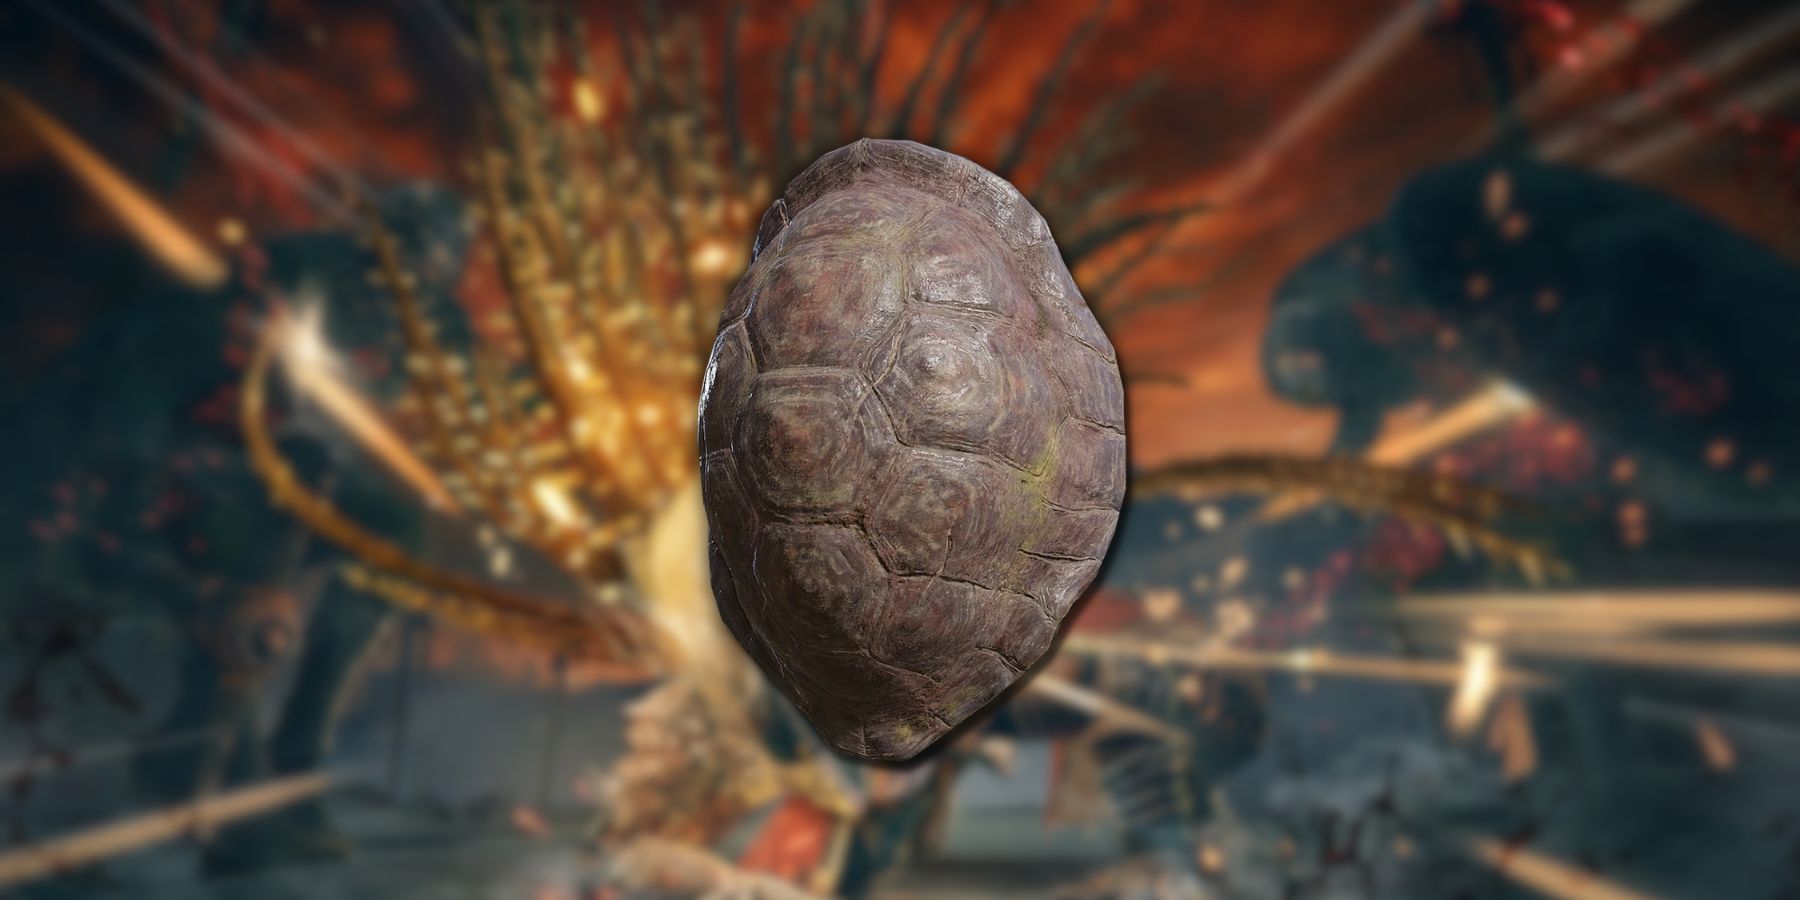 Great Turtle Shell in Elden Ring